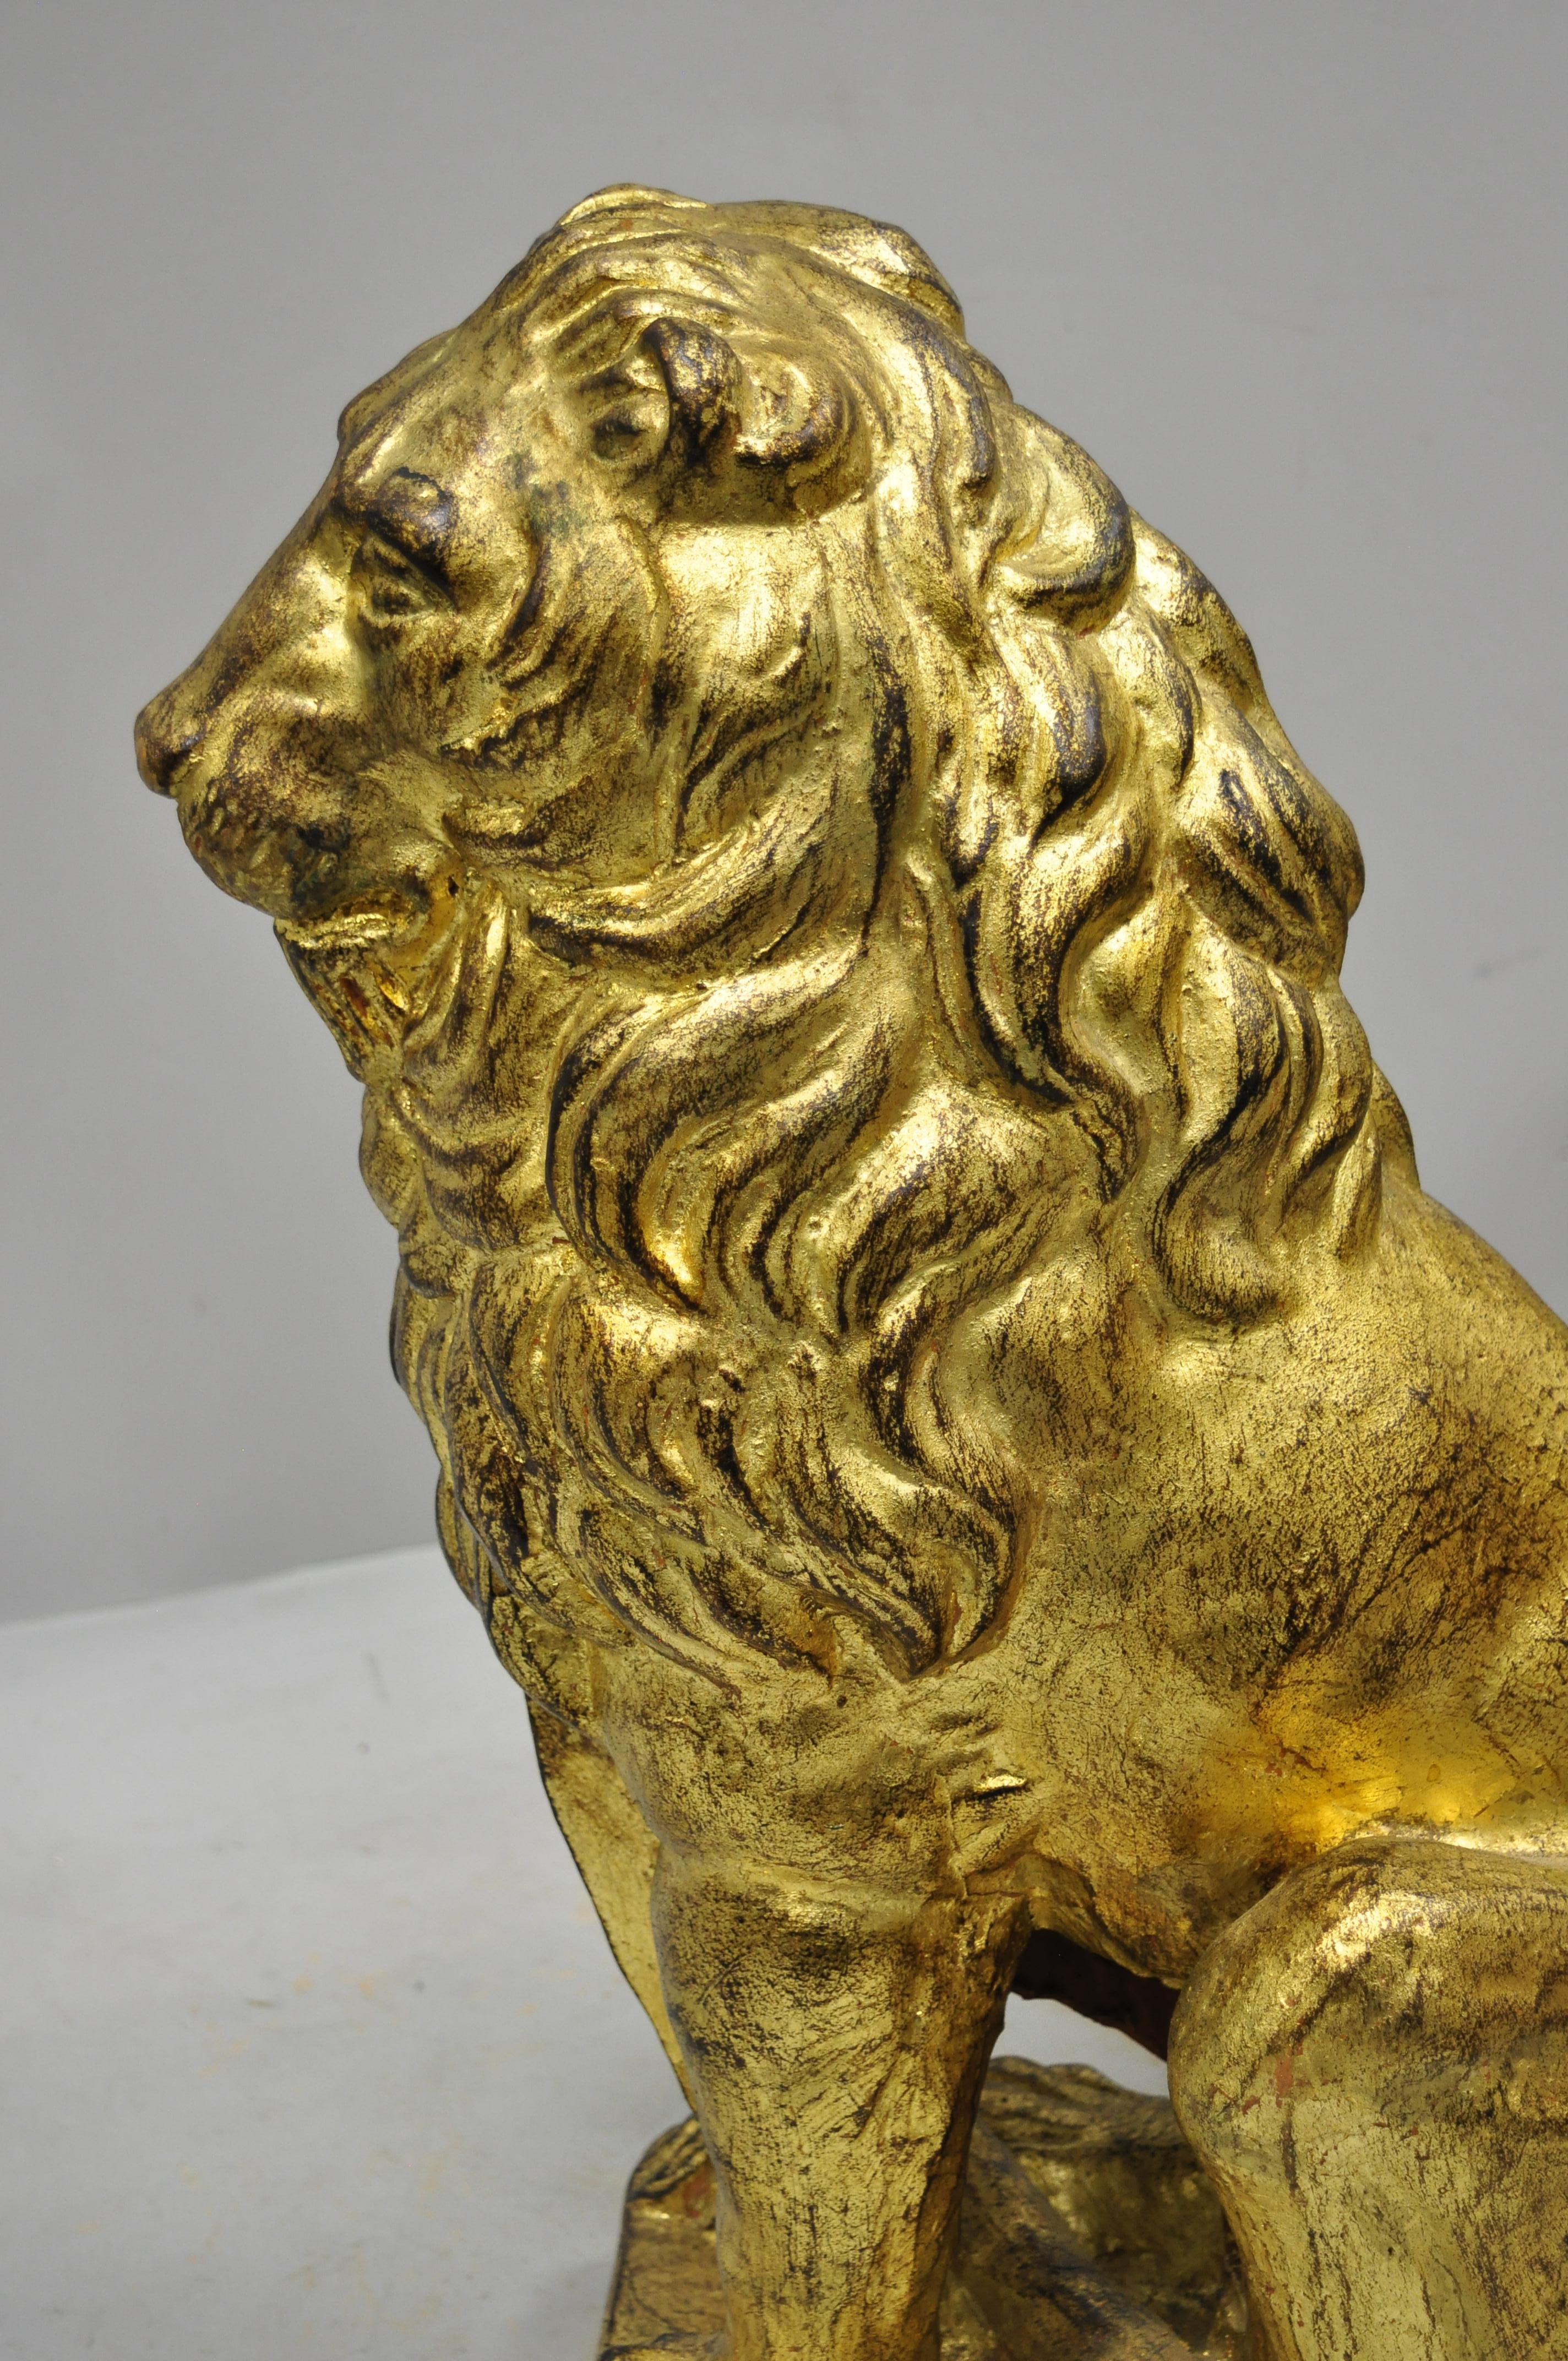 Pair of Italian Terracotta Gold Leaf Lion Statues Sculpture 2